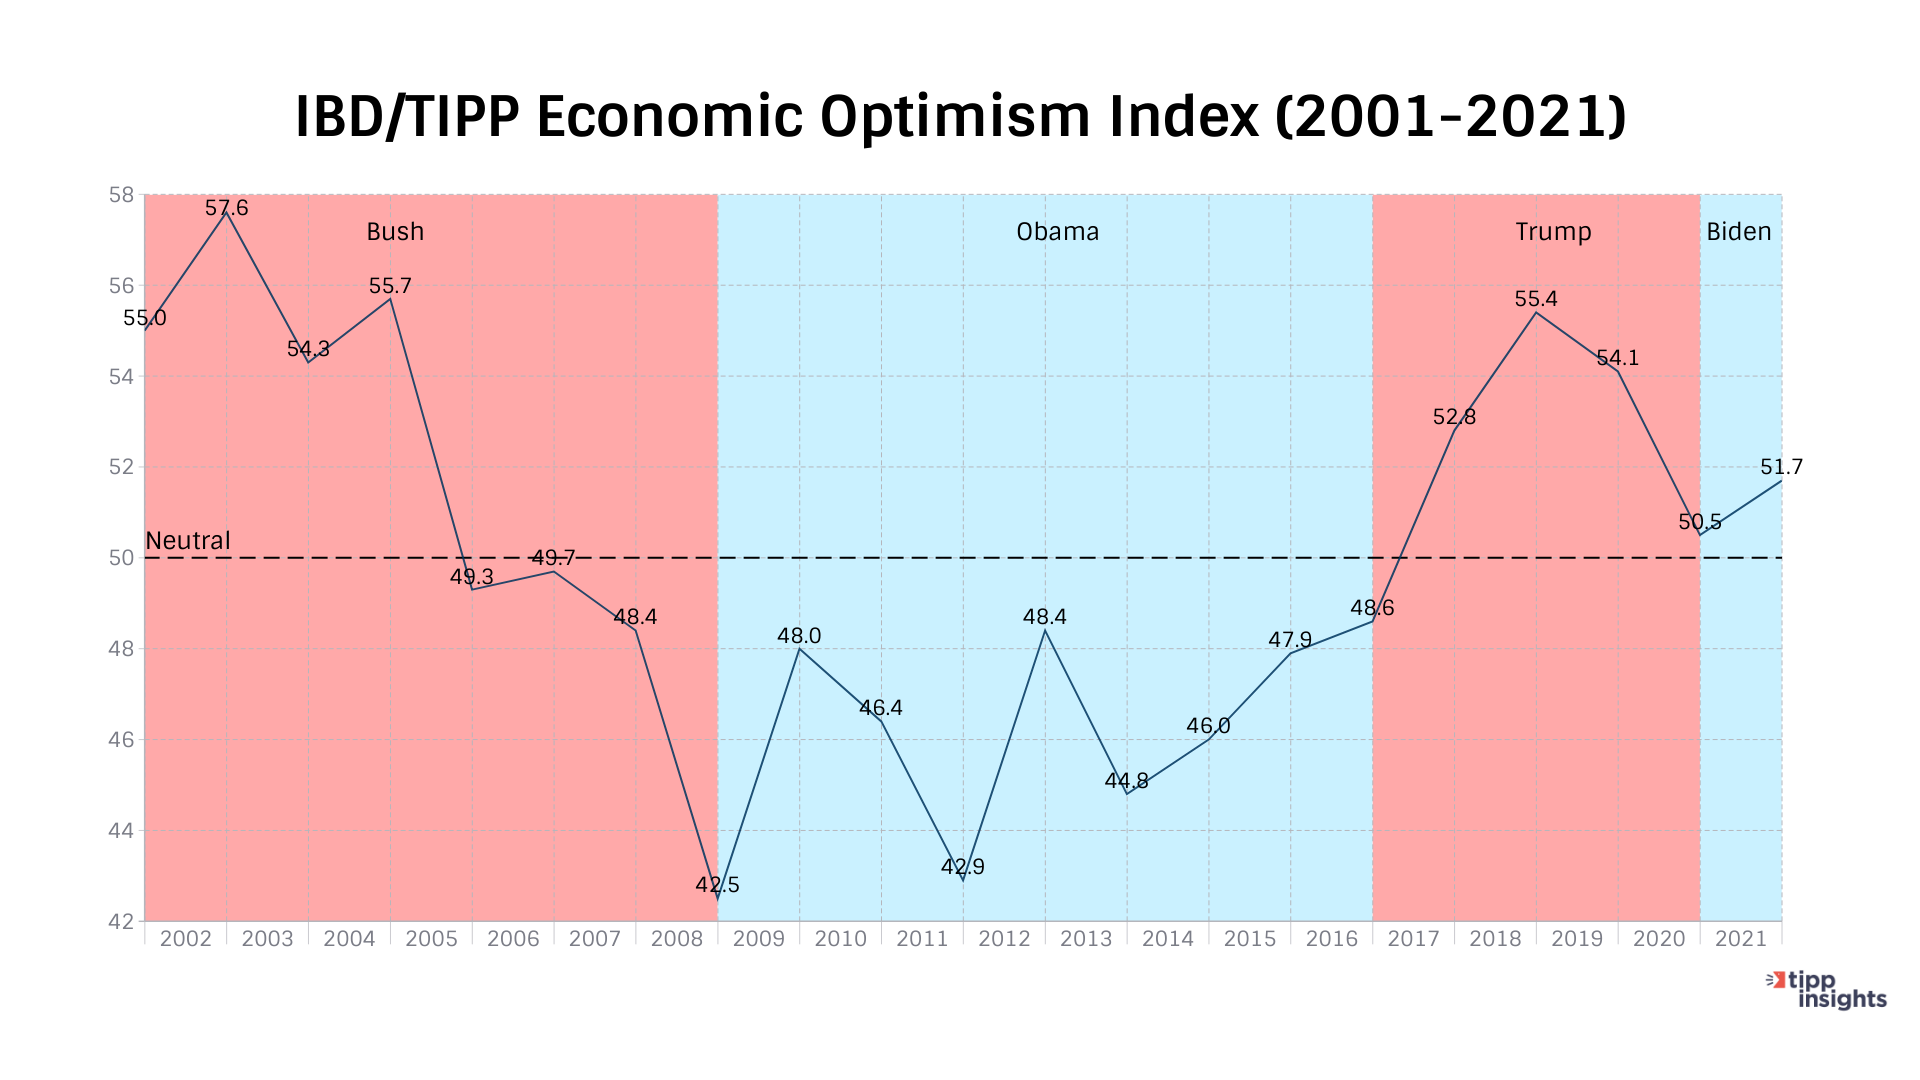 IBD/TIPP Poll Results: Economic optimism index 2001-2021